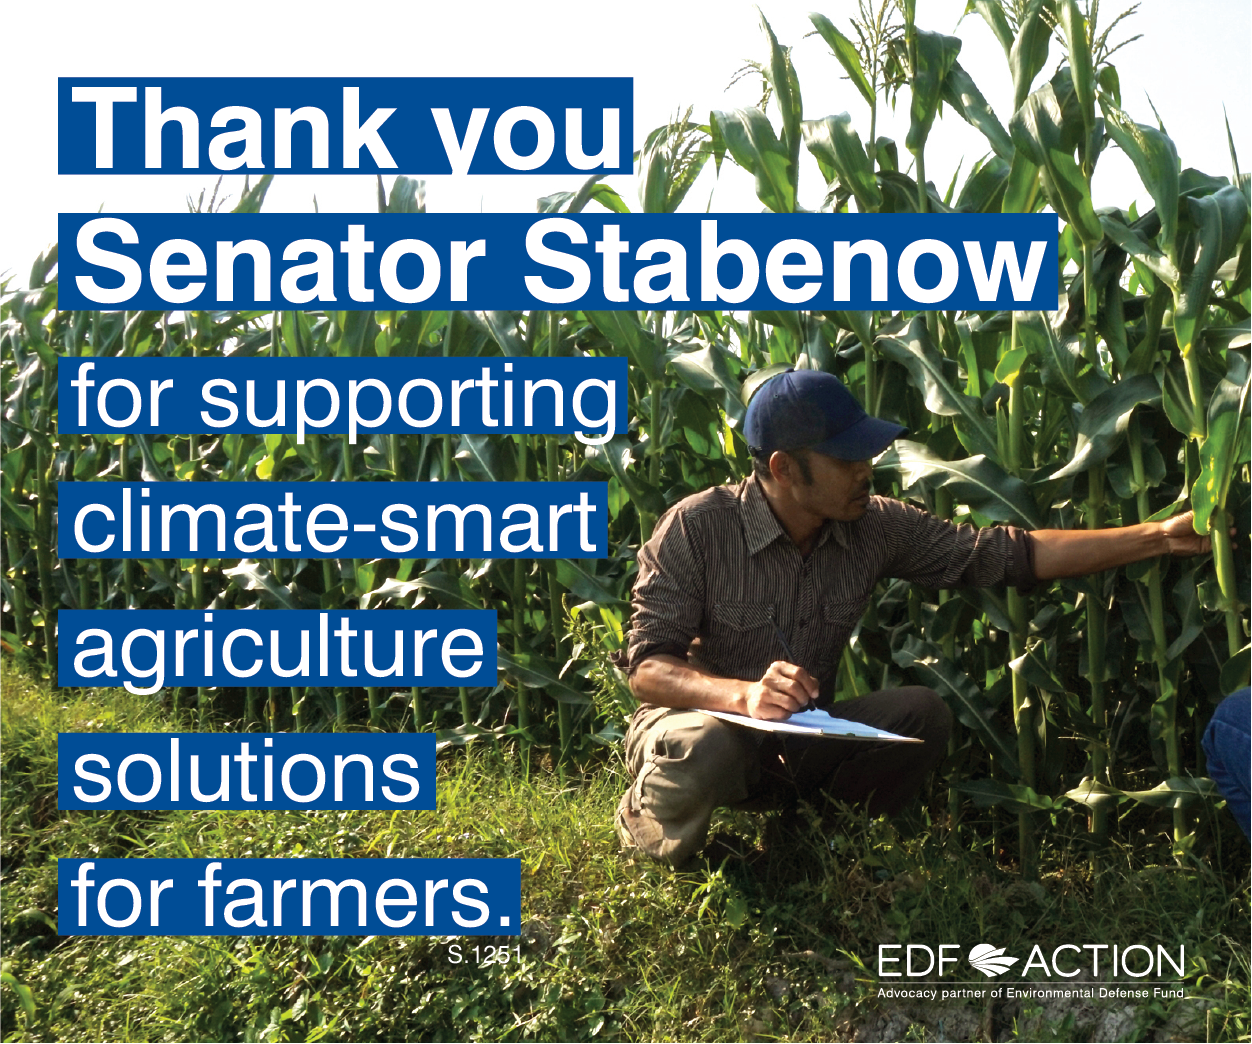 Thank you Senator Stabenow